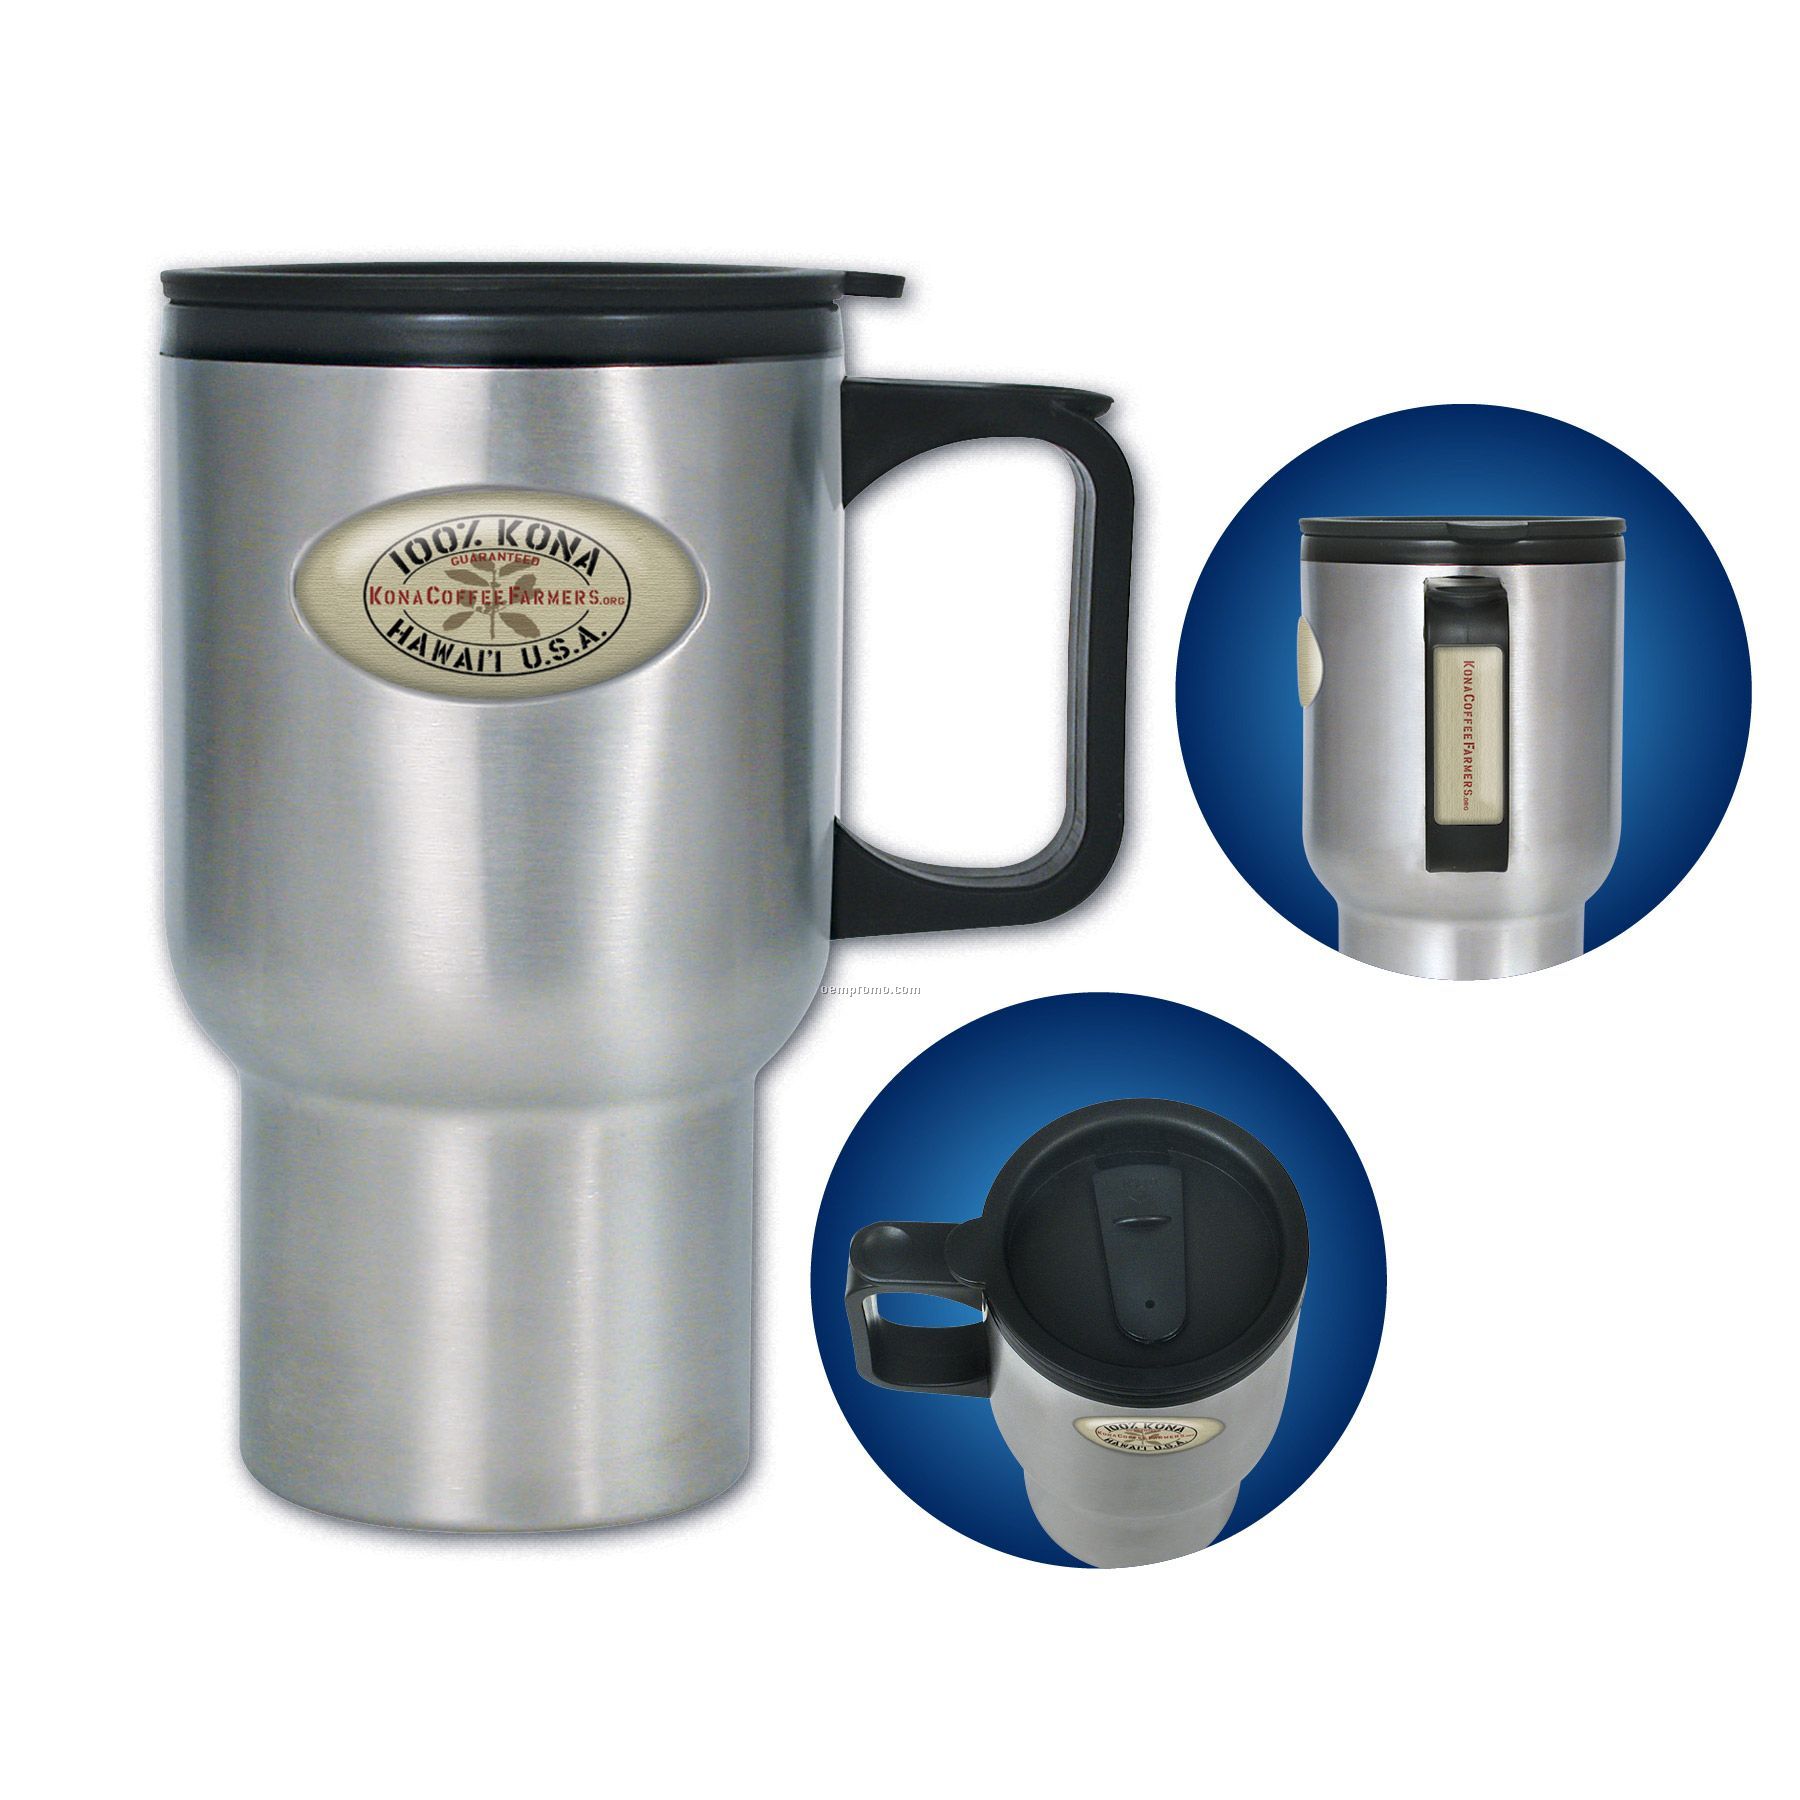 Brand Gear Stainless Steel Travel Mug